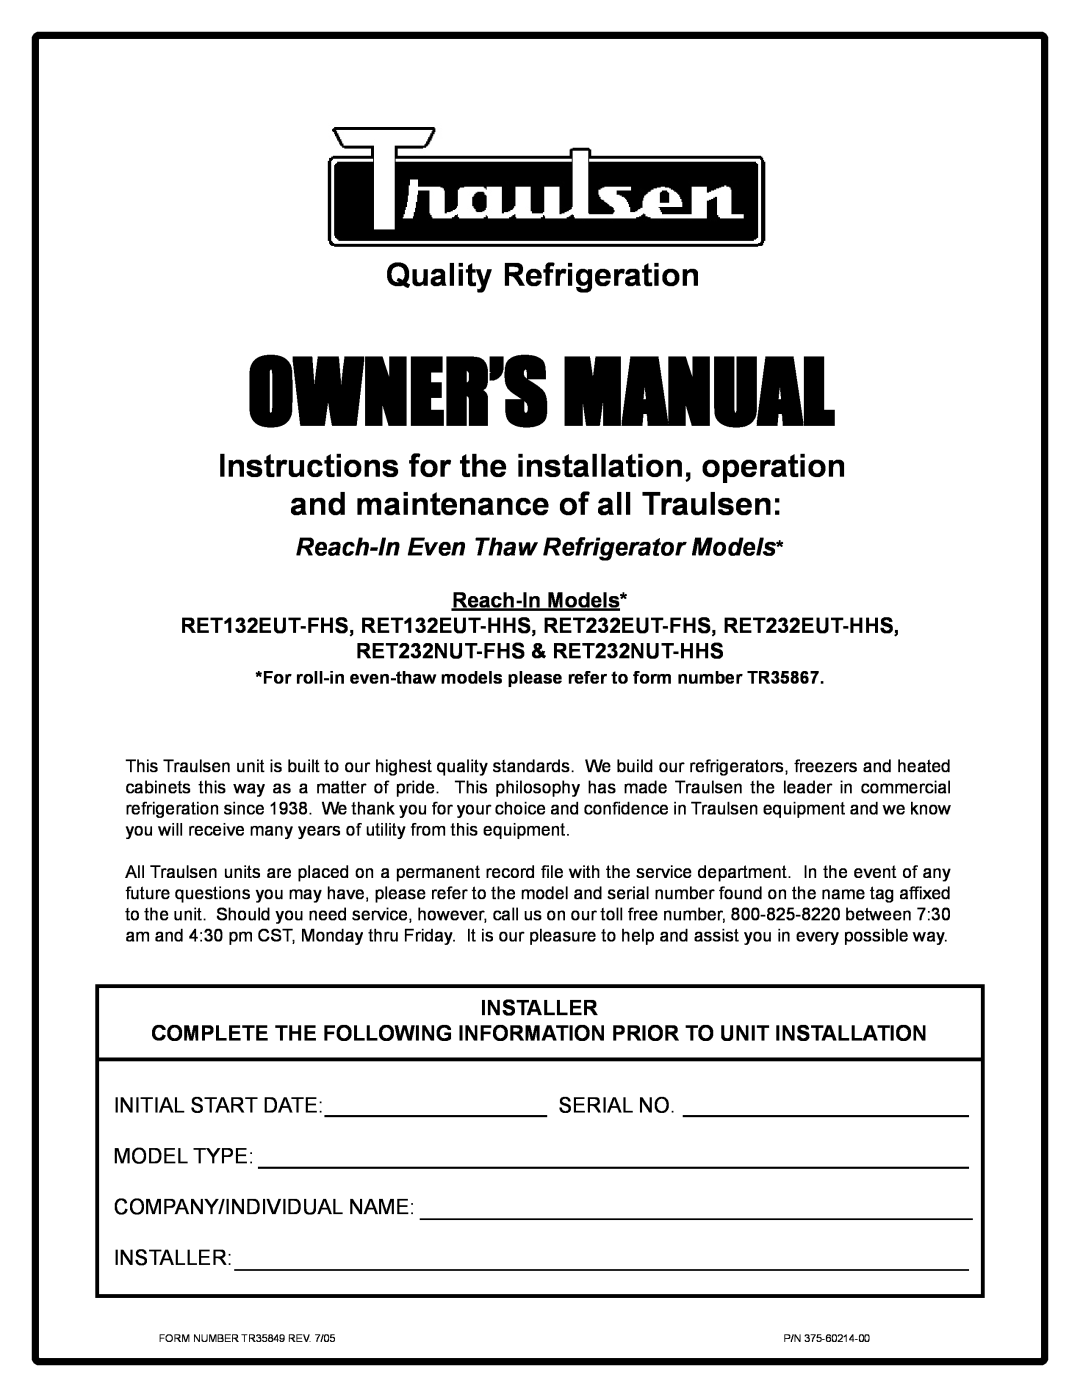 Traulsen RET132EUT-FHS owner manual Reach-InModels, RET232NUT-FHS& RET232NUT-HHS, Installer, Initial Start Date, Serial No 